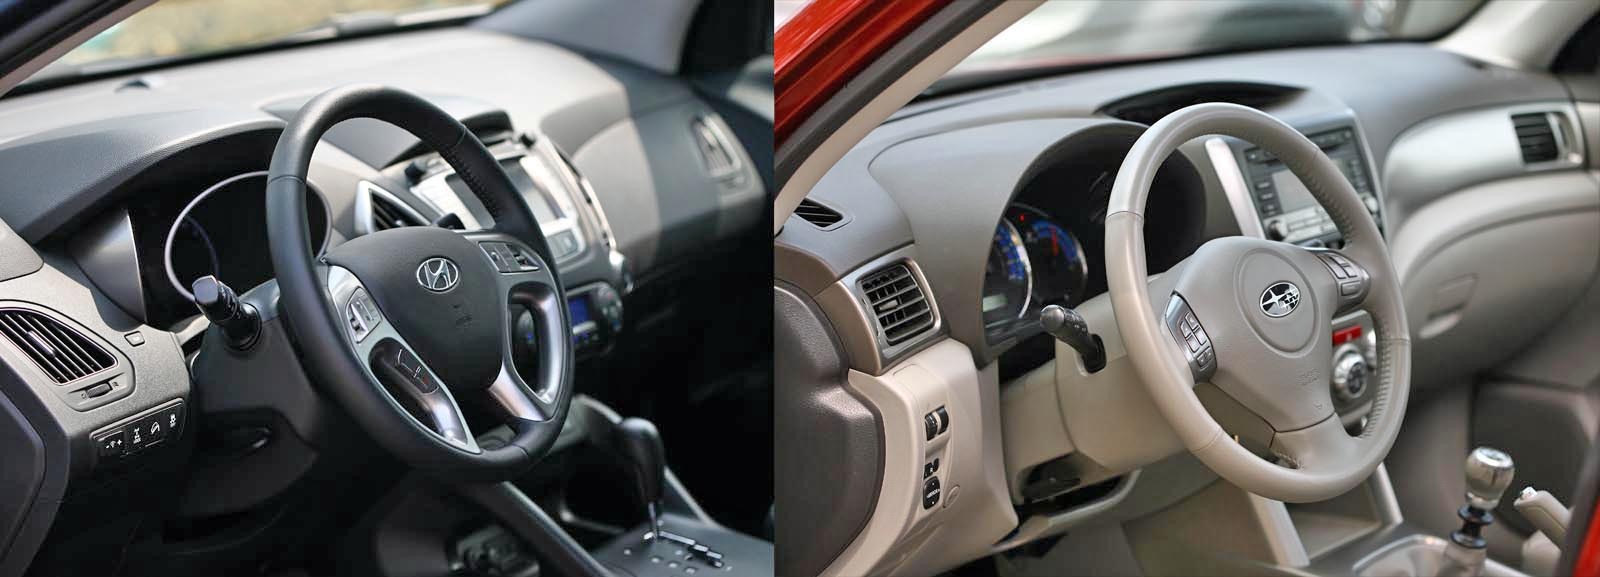 Nivelul calitatii este ceva mai bun in Hyundai ix35, dar Forester are o ergonomie mai evoluata